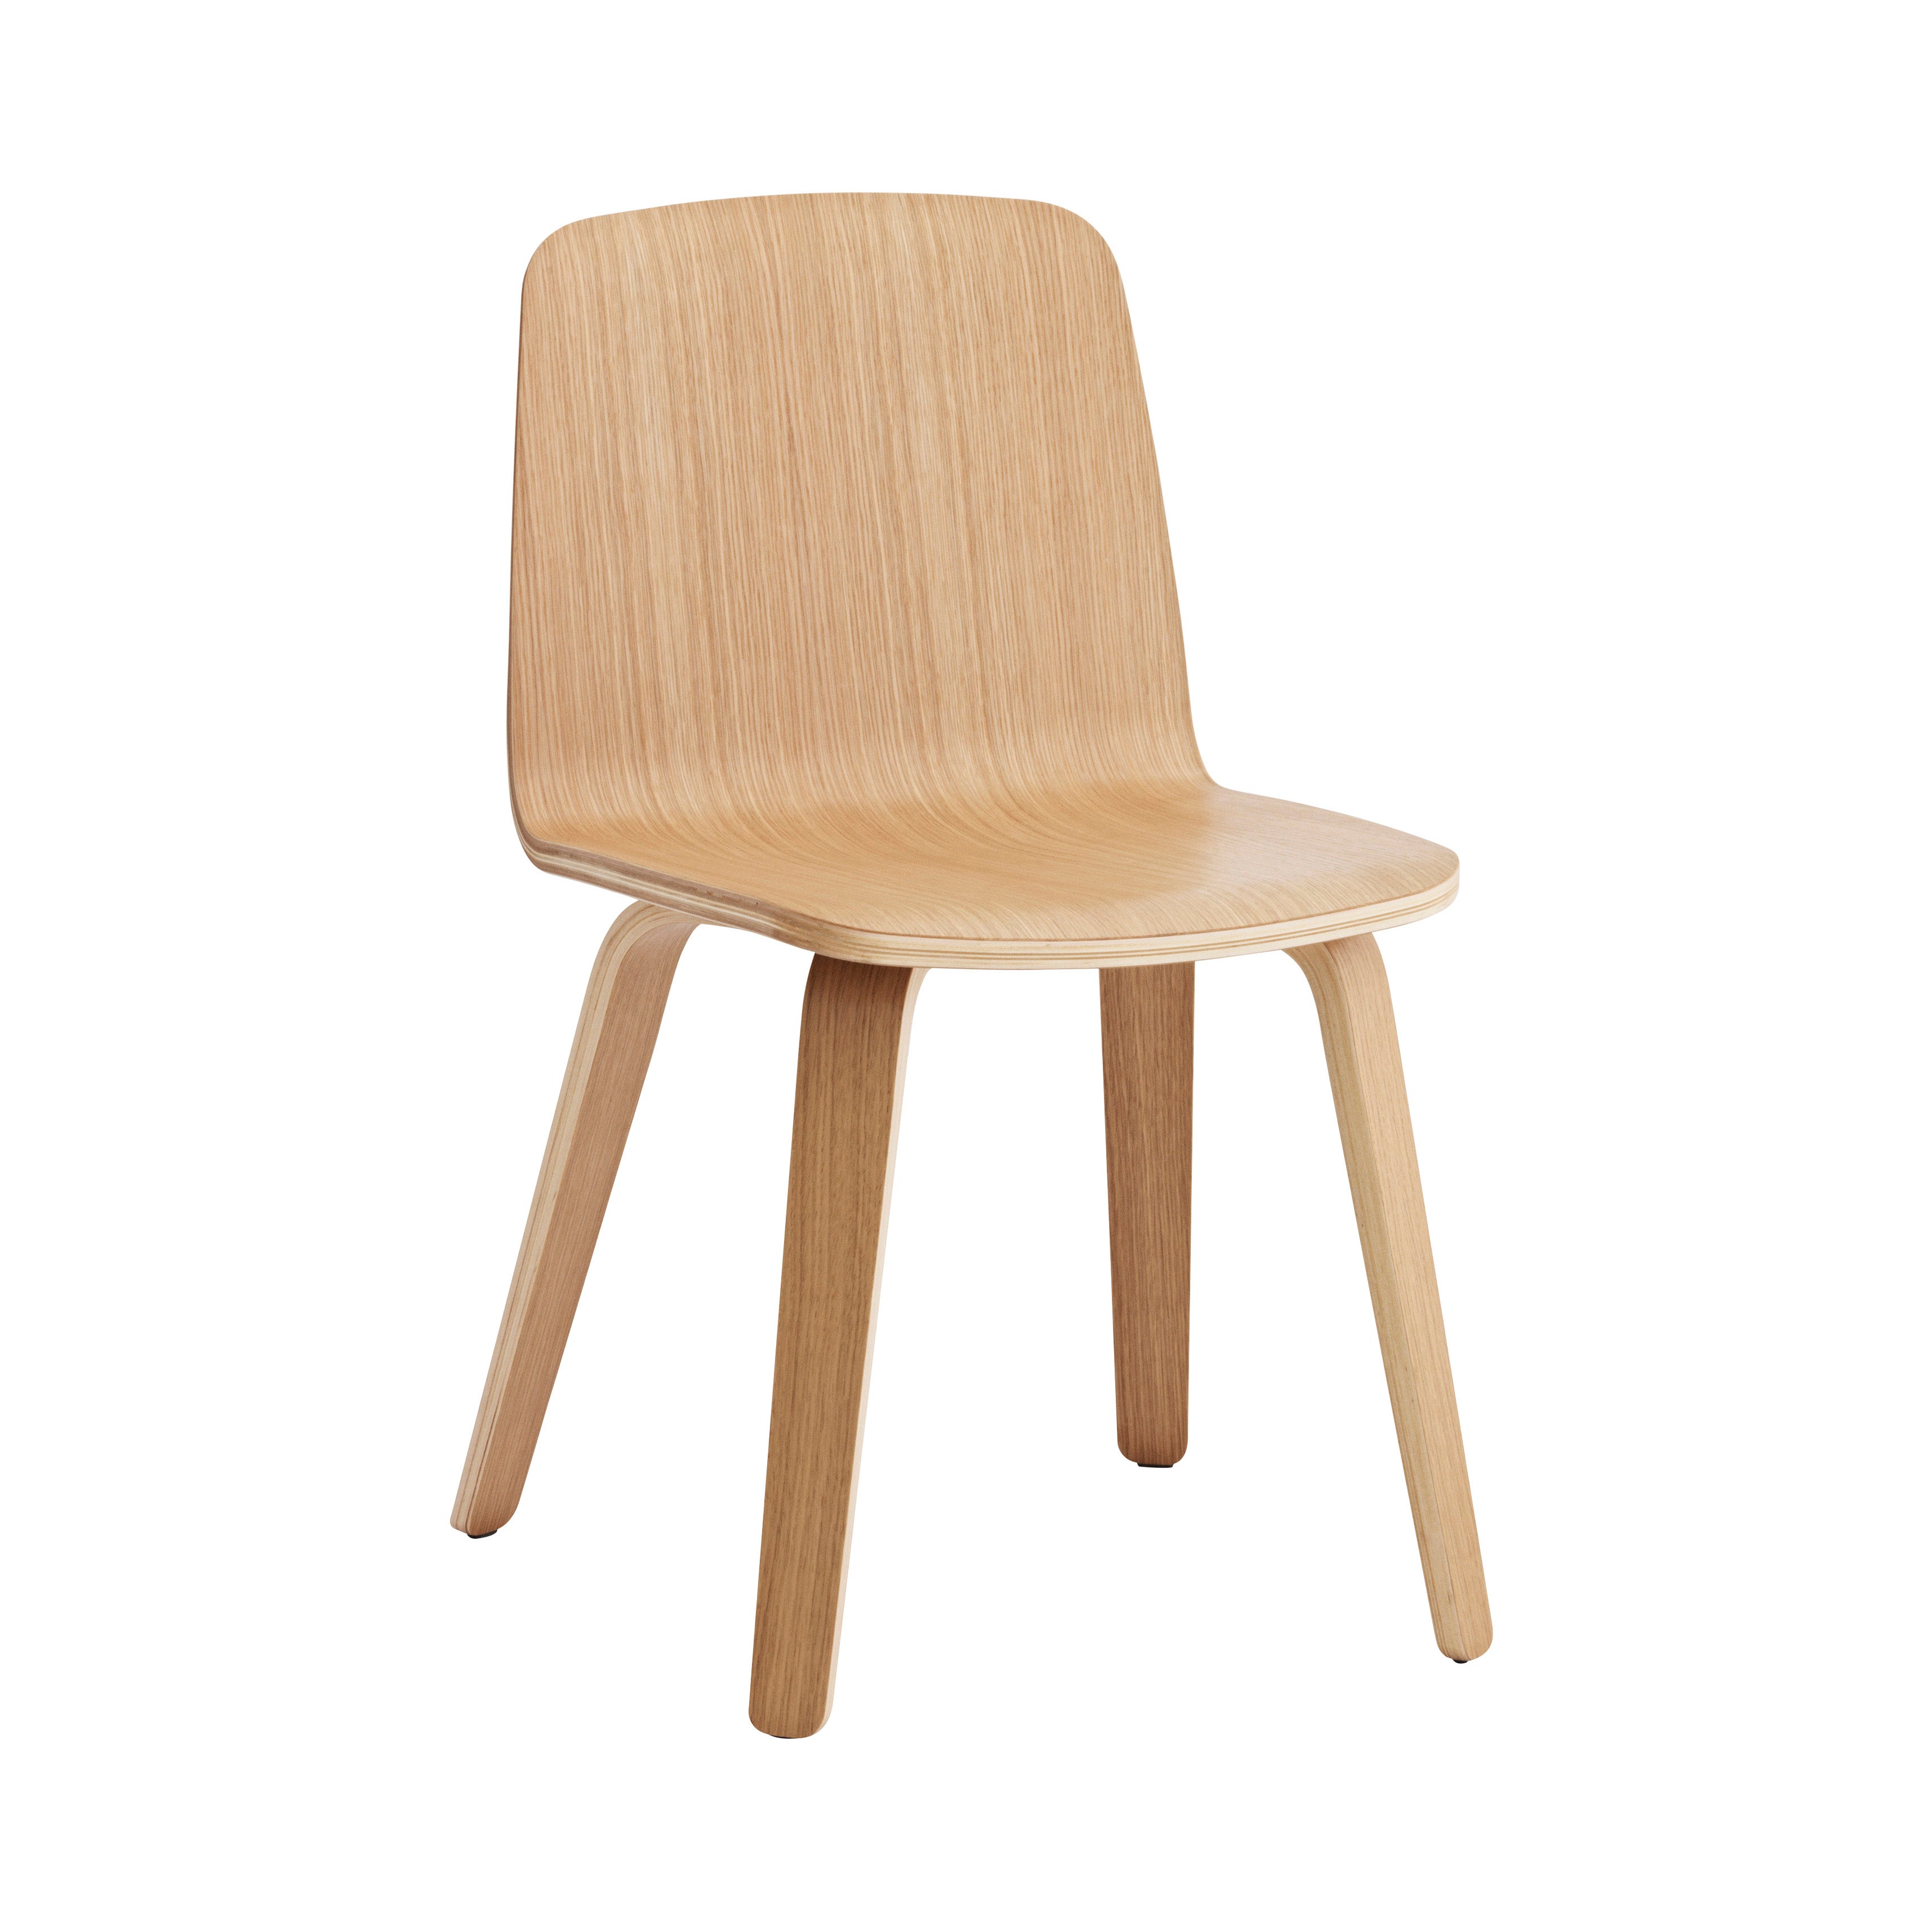 Just Chair: Oak